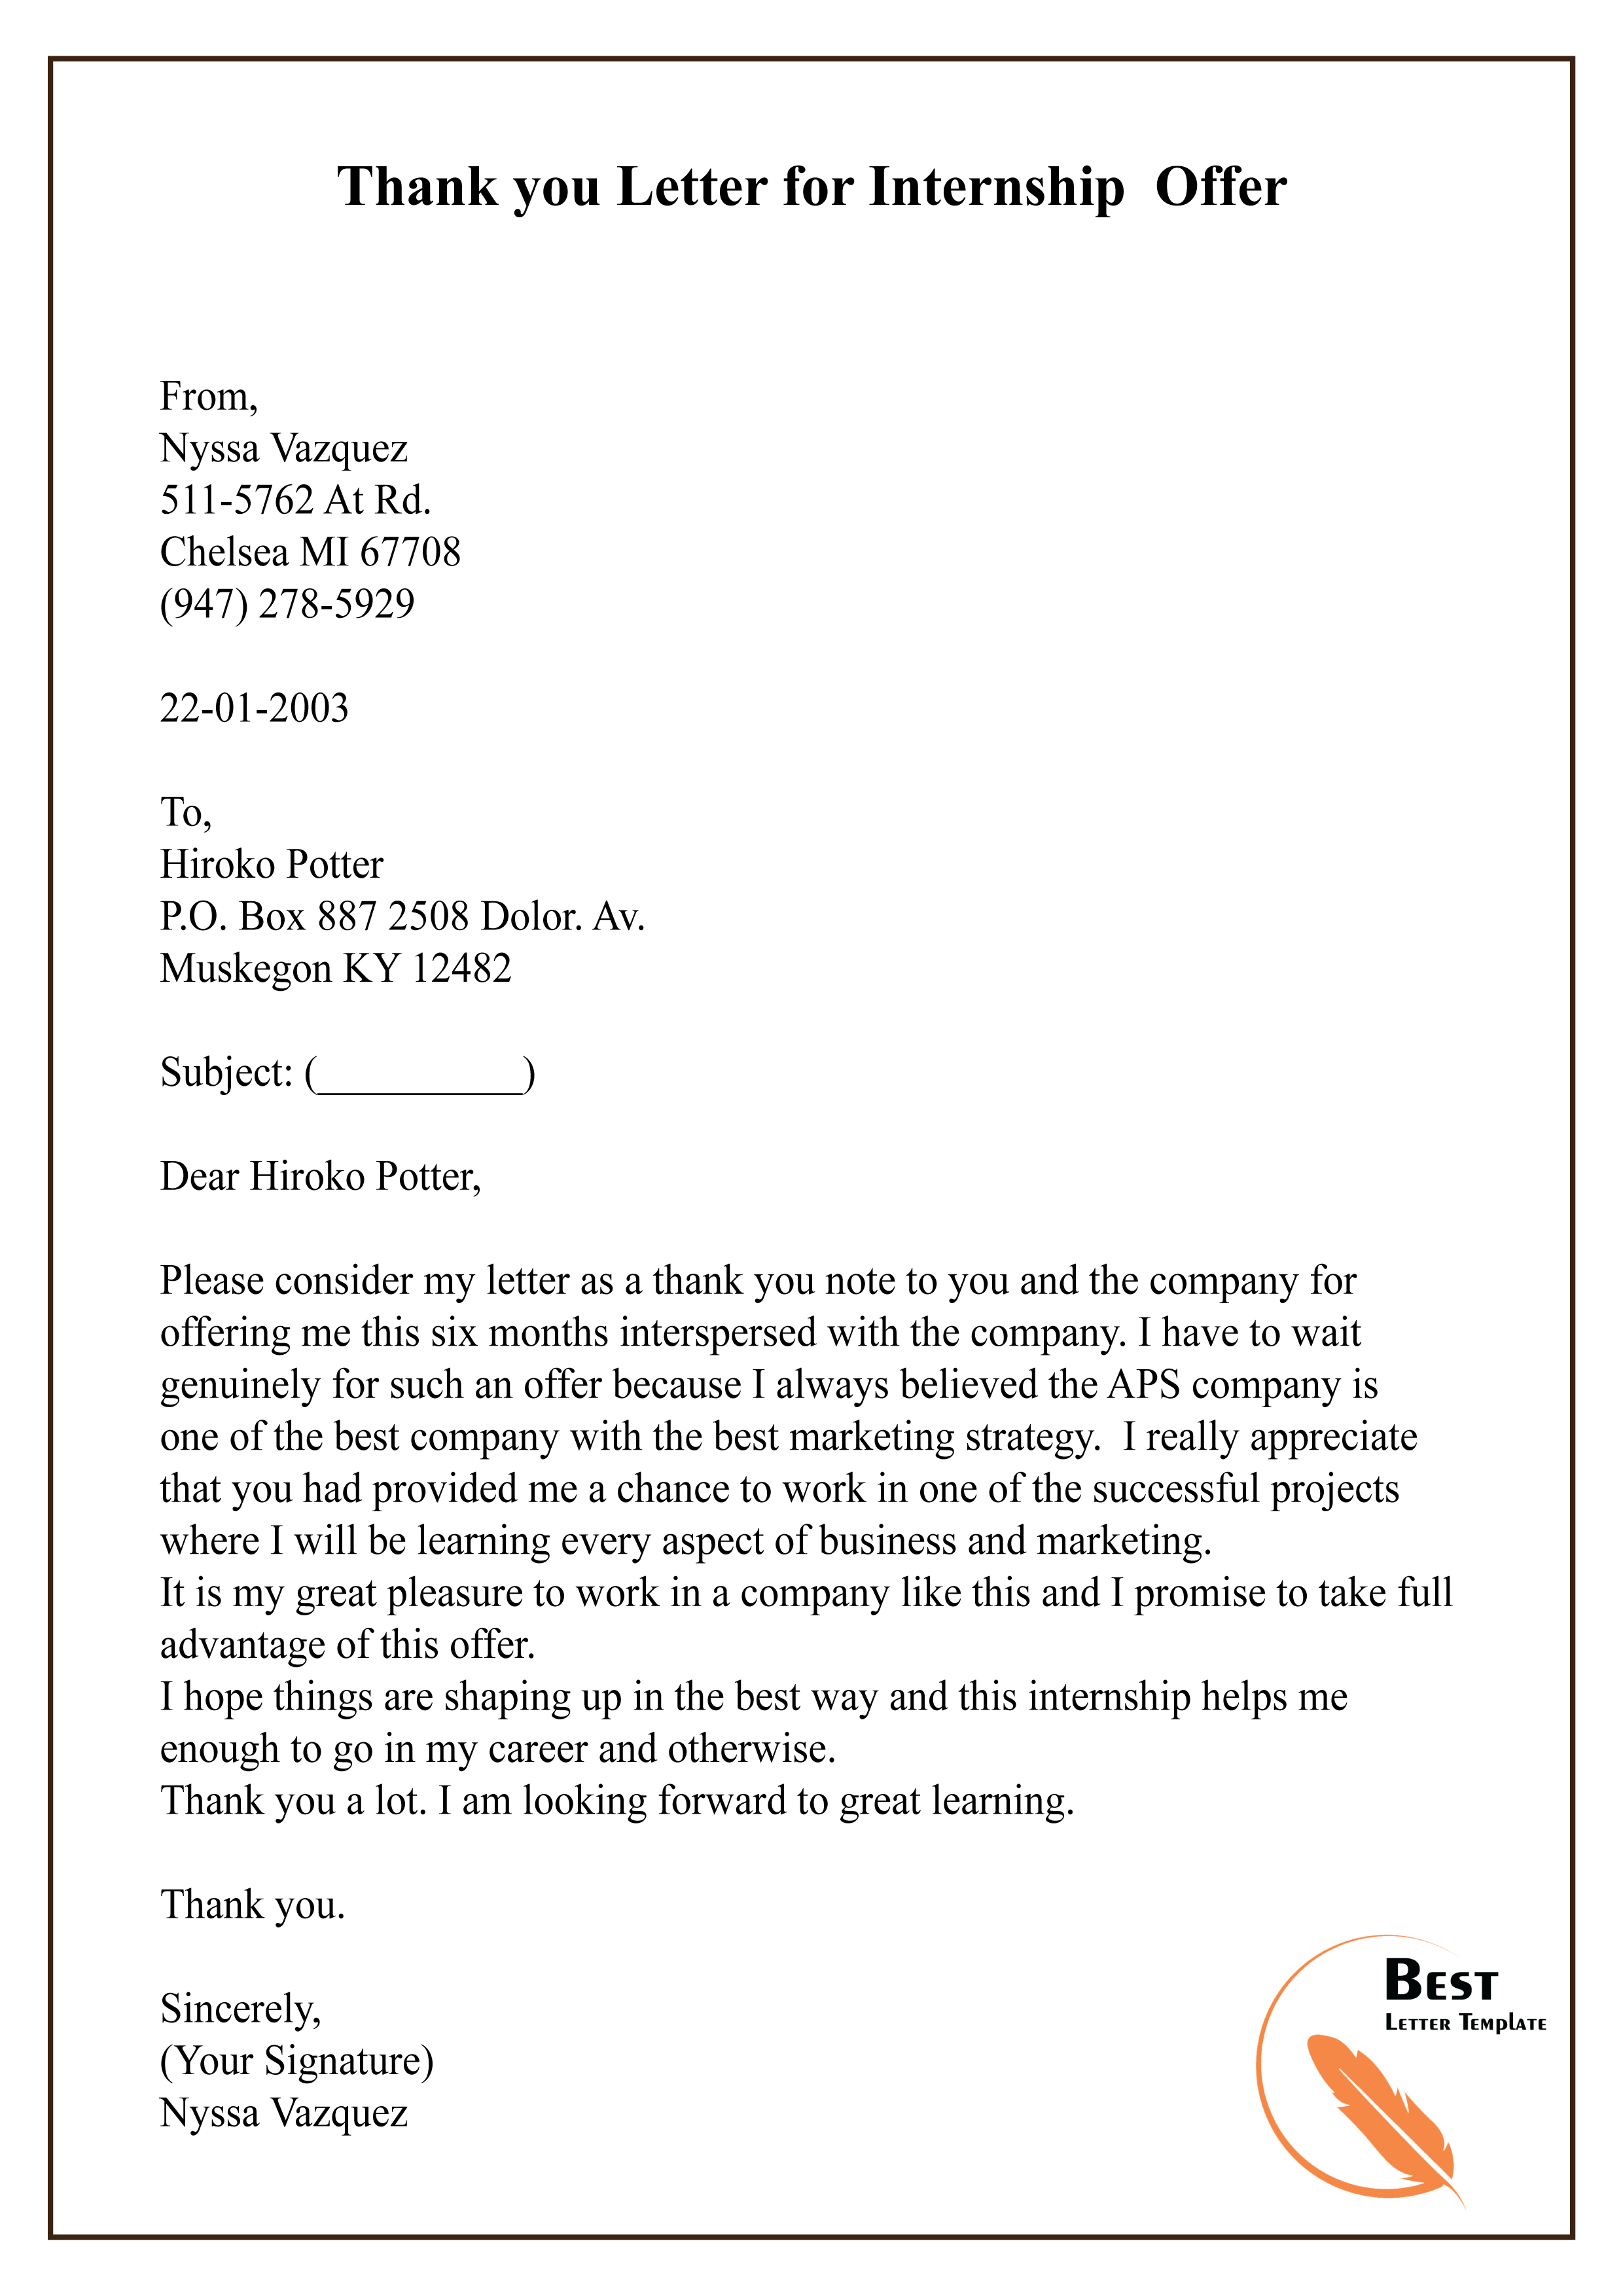 Thank You Letter For Offer from bestlettertemplate.com